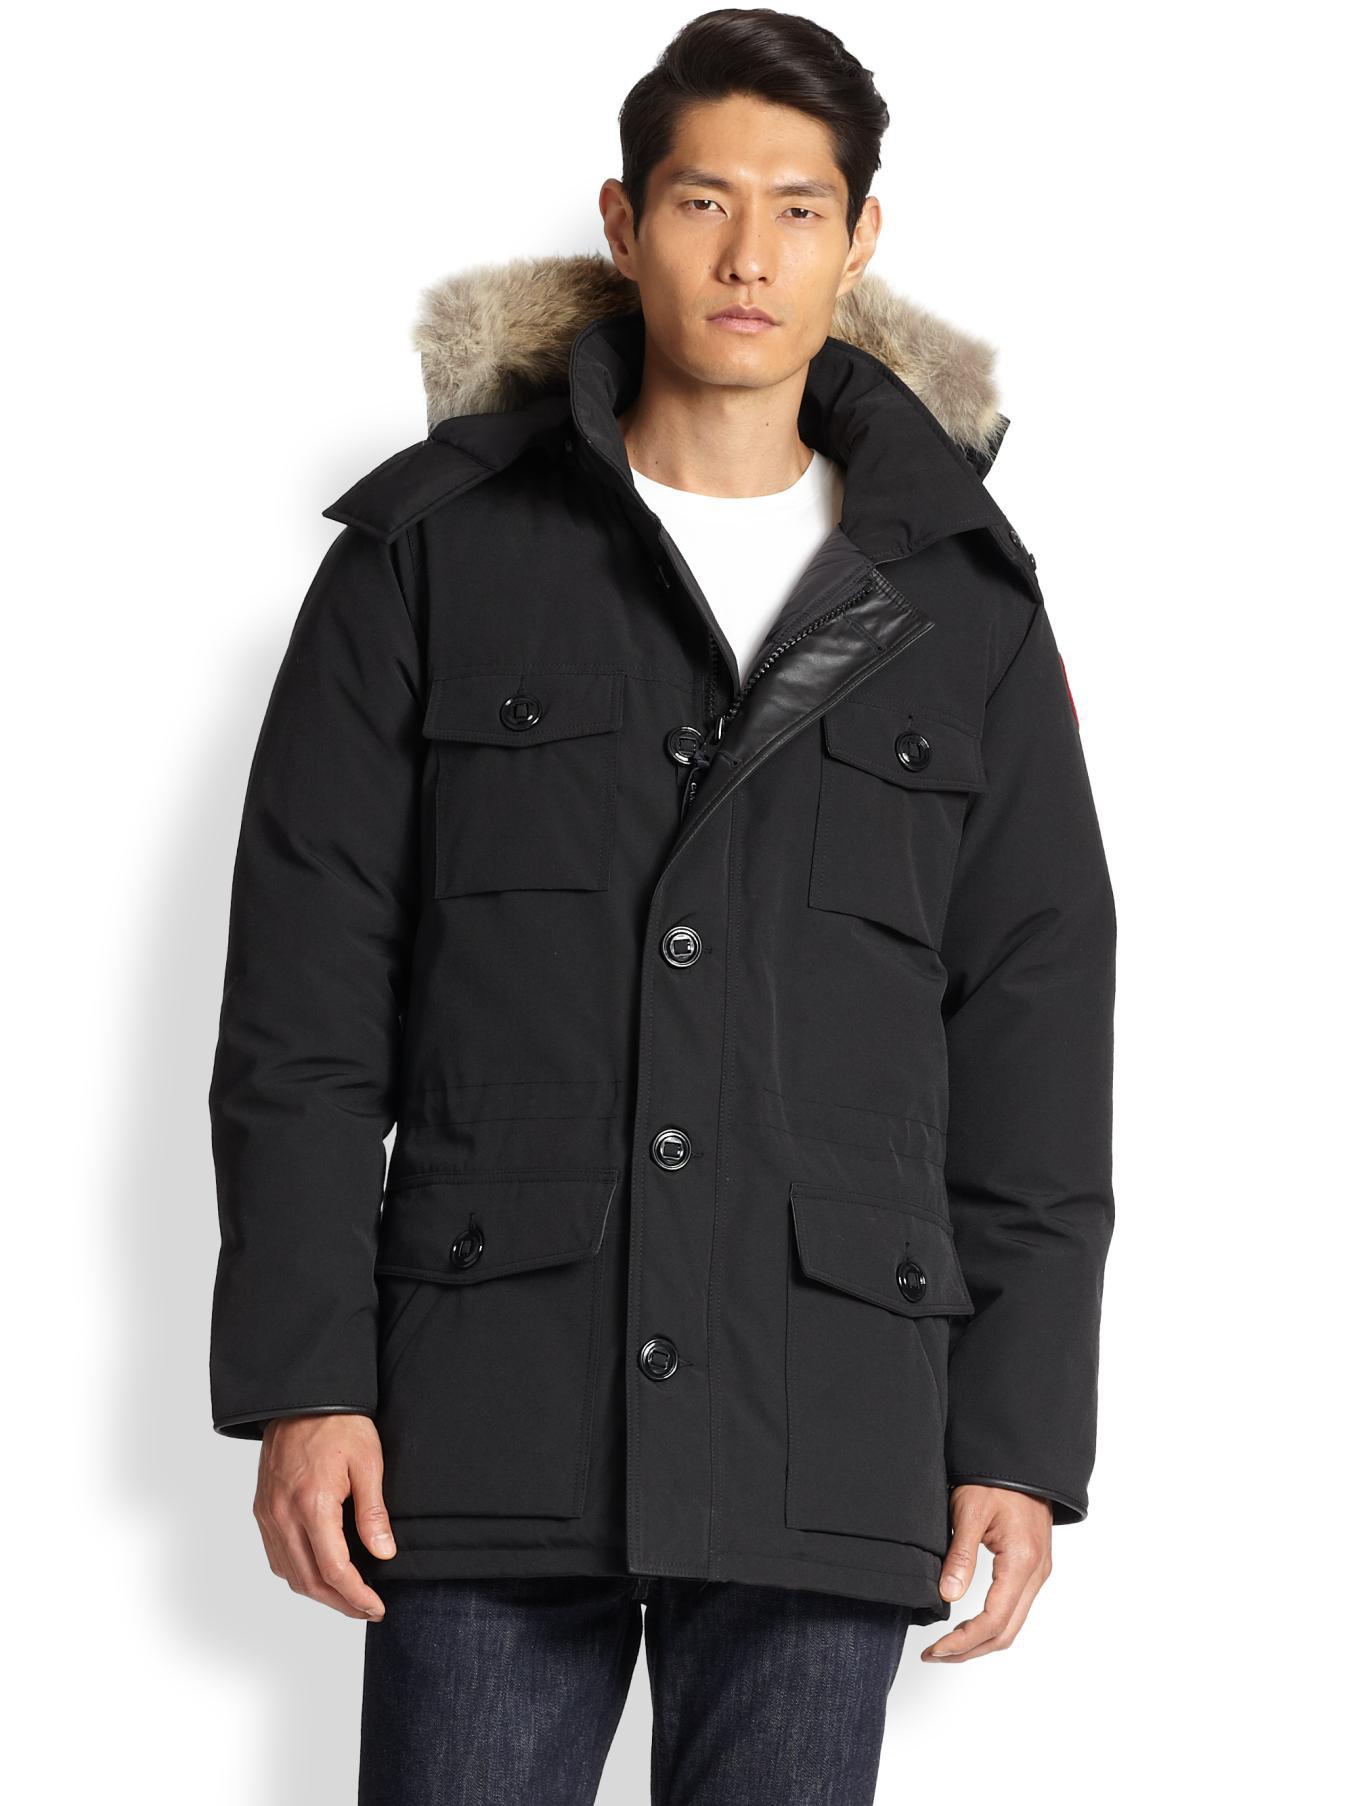 Lyst - Canada Goose Banff Fur-trimmed Puffer Coat in Black for Men